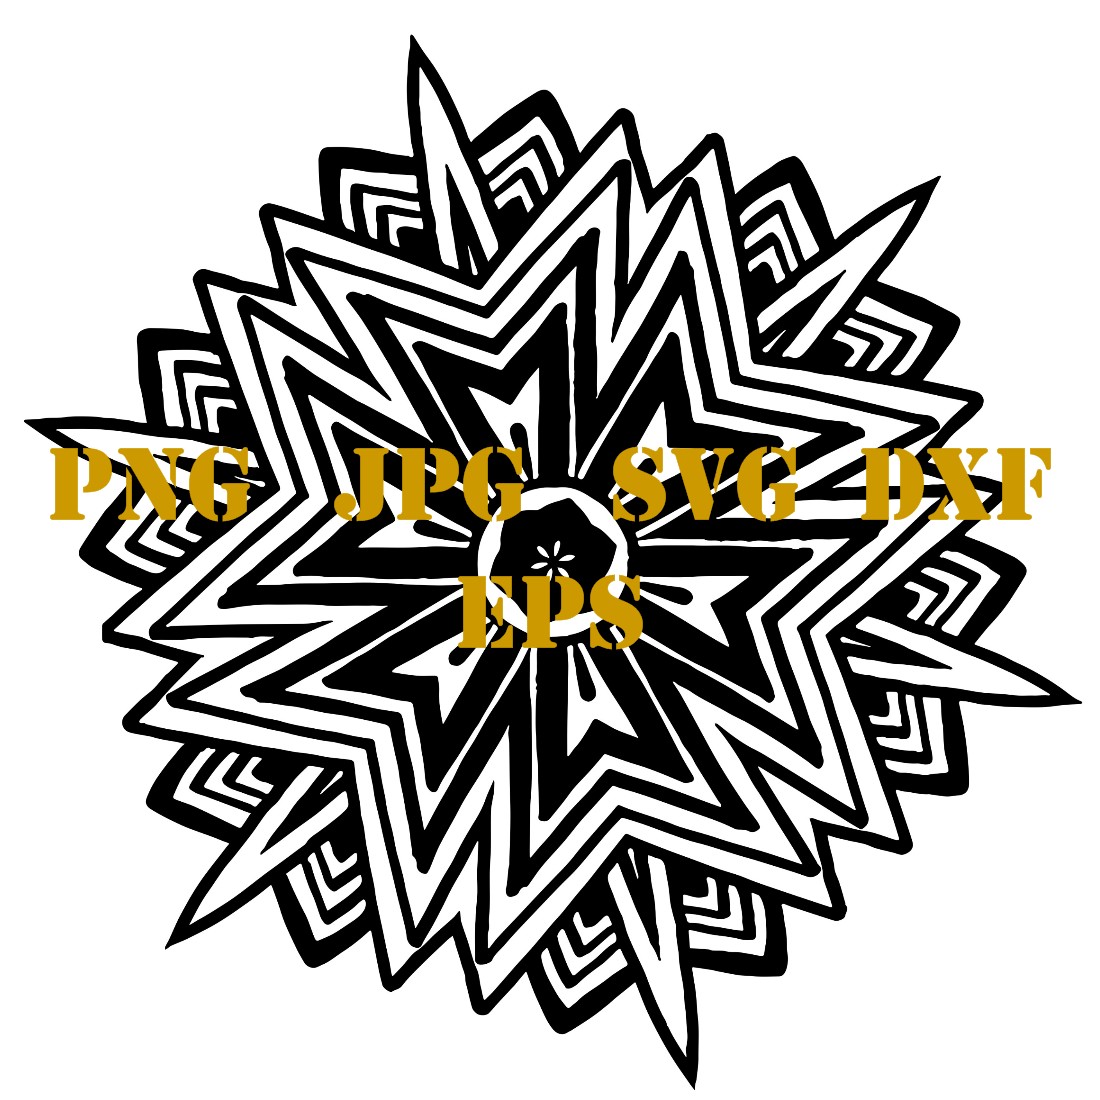 Black Snowflake Design cover image.